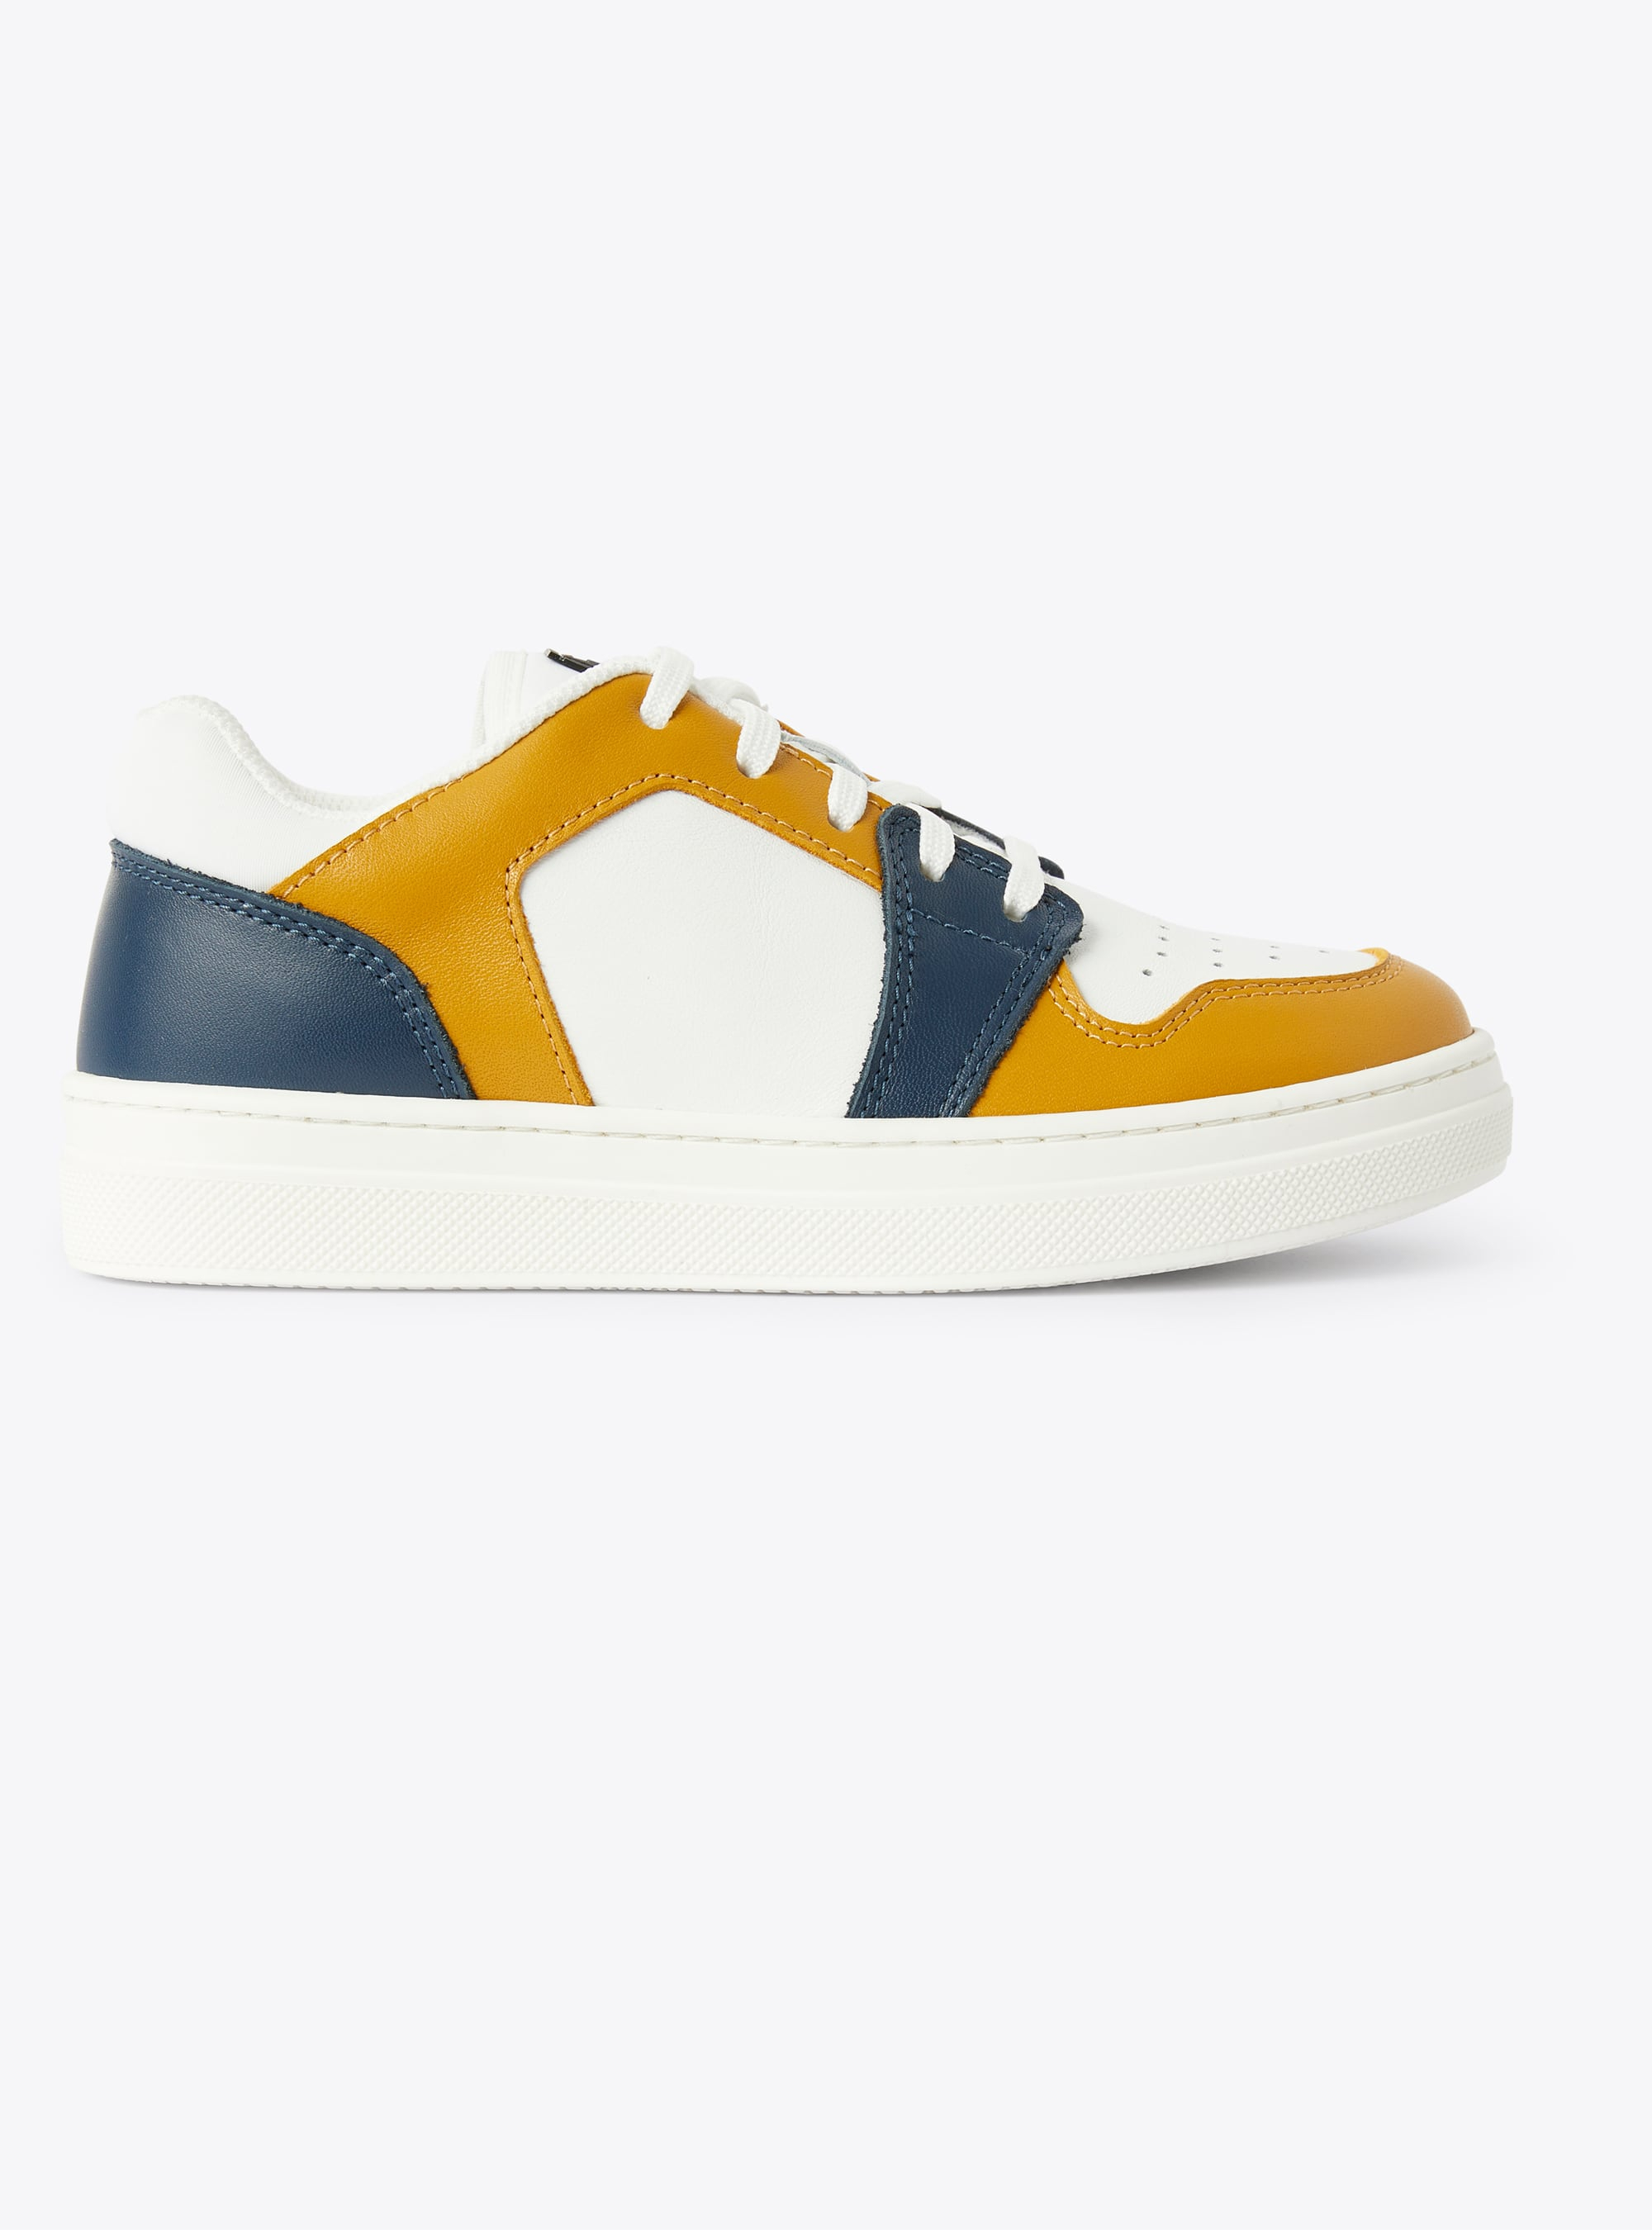 Low-top two-tone IG sneaker in cinnamon and blue - Orange | Il Gufo